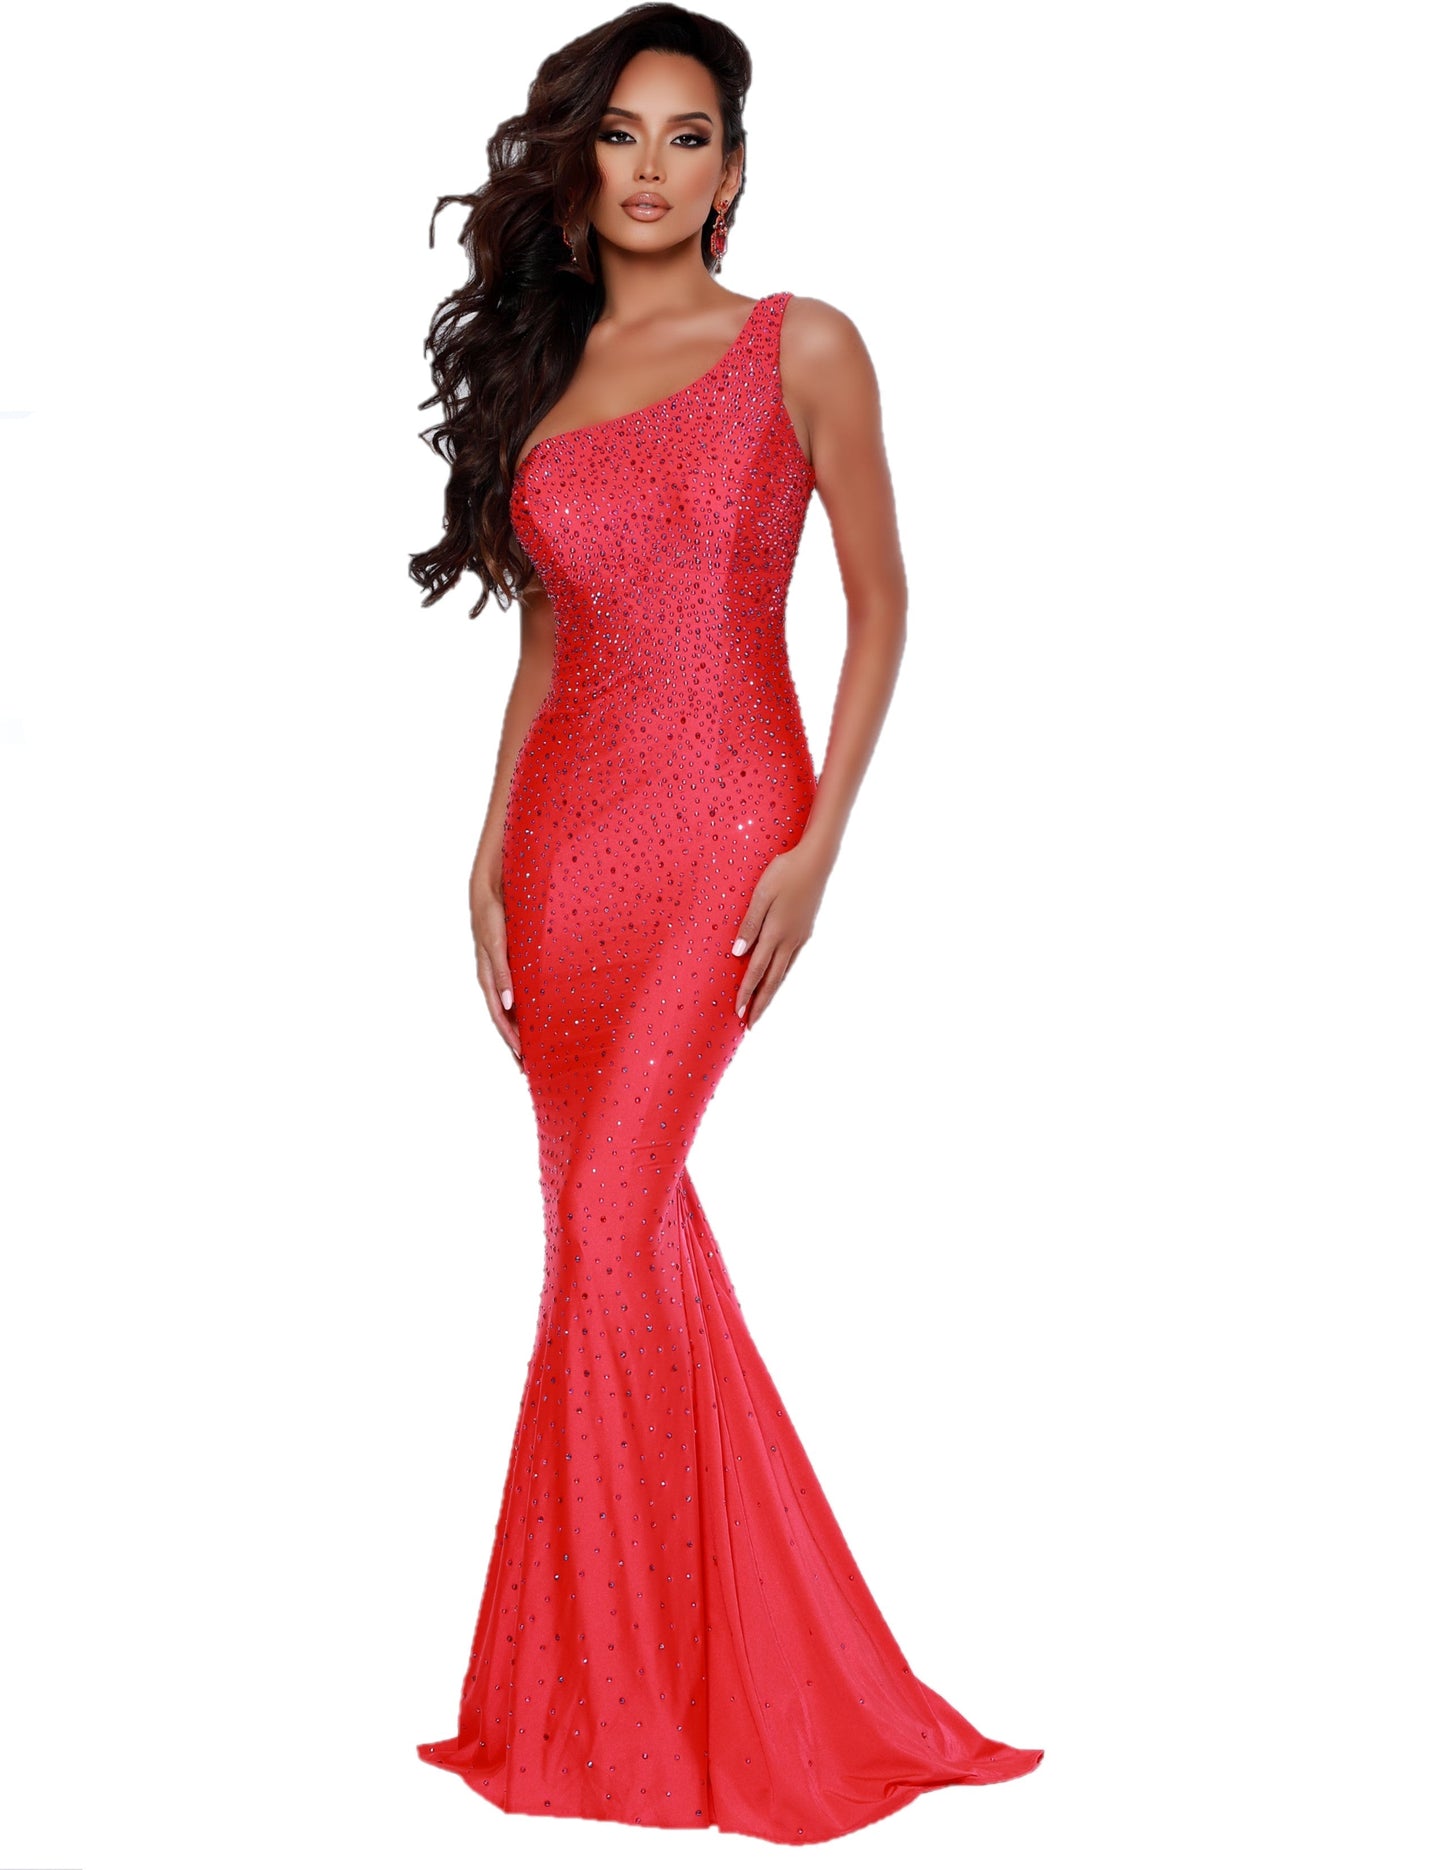 Johnathan Kayne 2318 Size 0, 14 Coral Prom Dress One Shoulder Embellished Long Train Pageant Dress